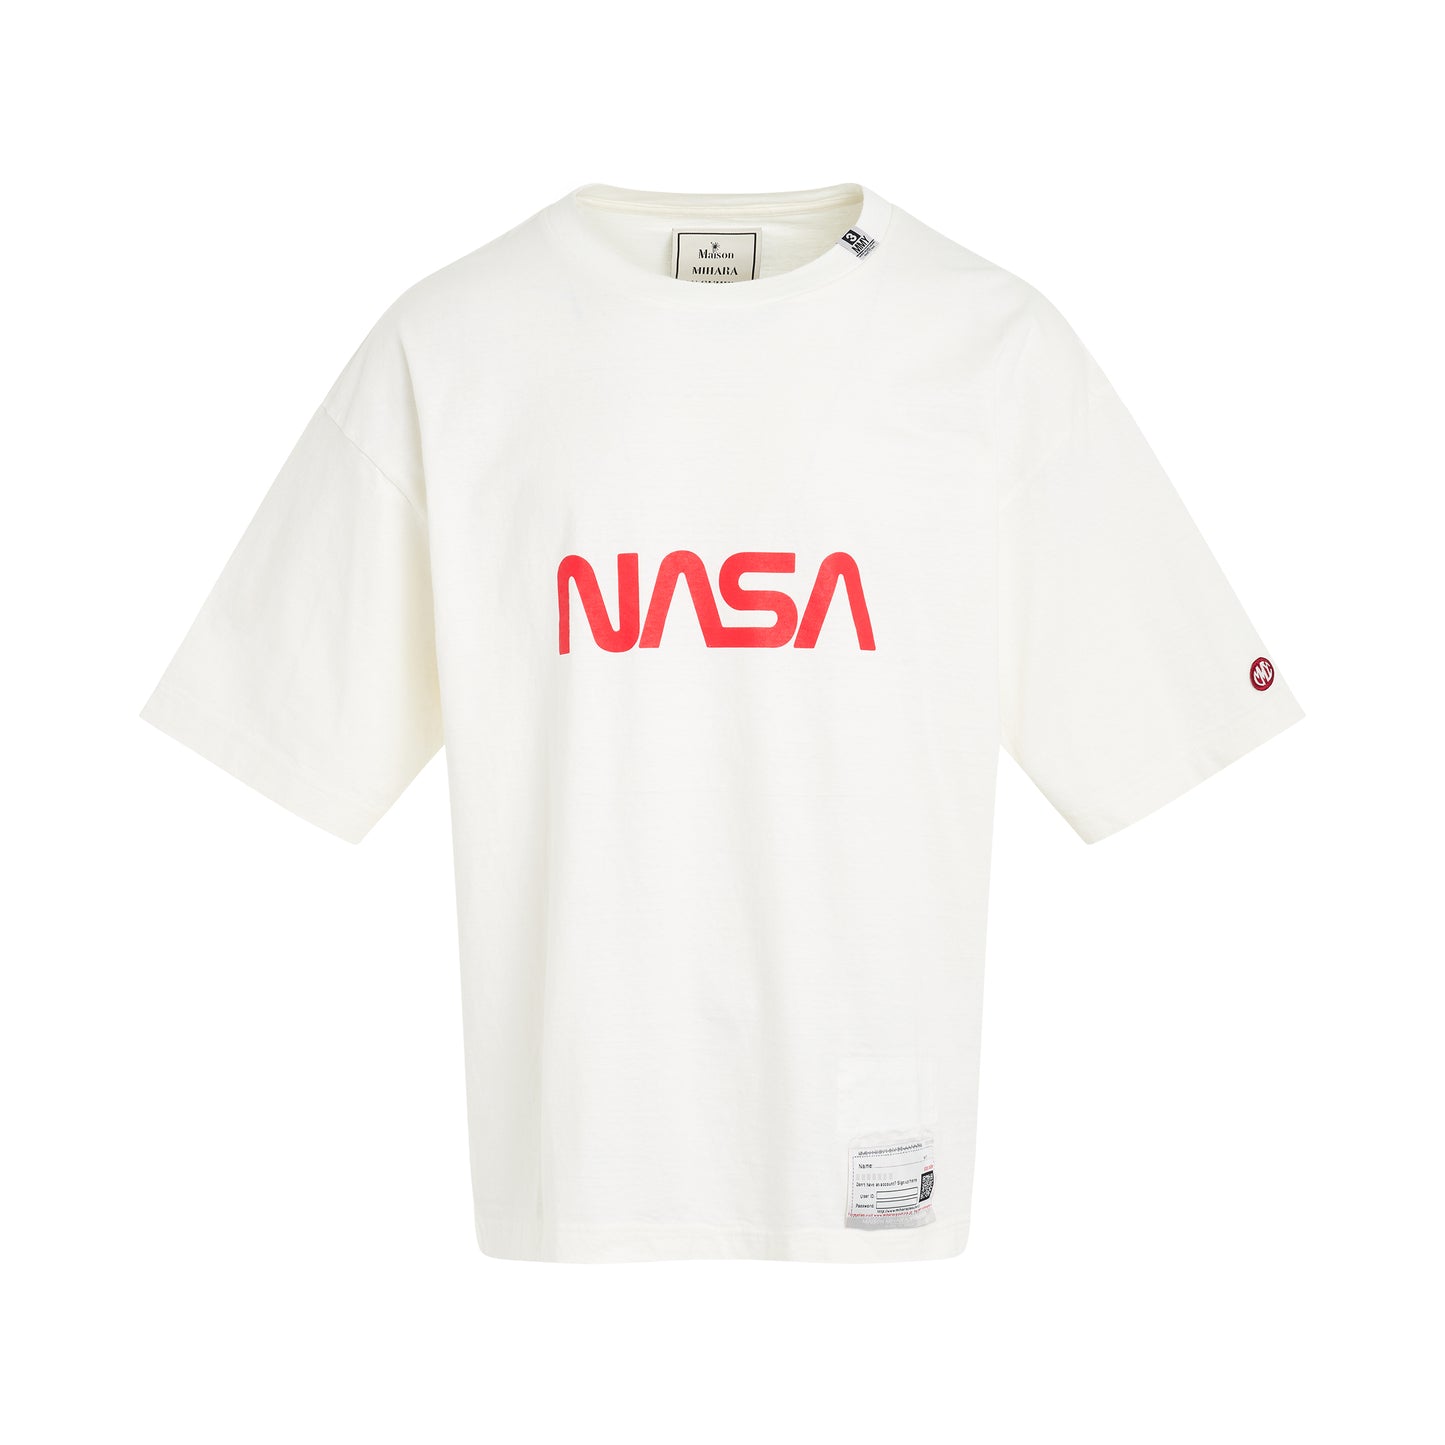 Nasa Printed T-Shirt in White